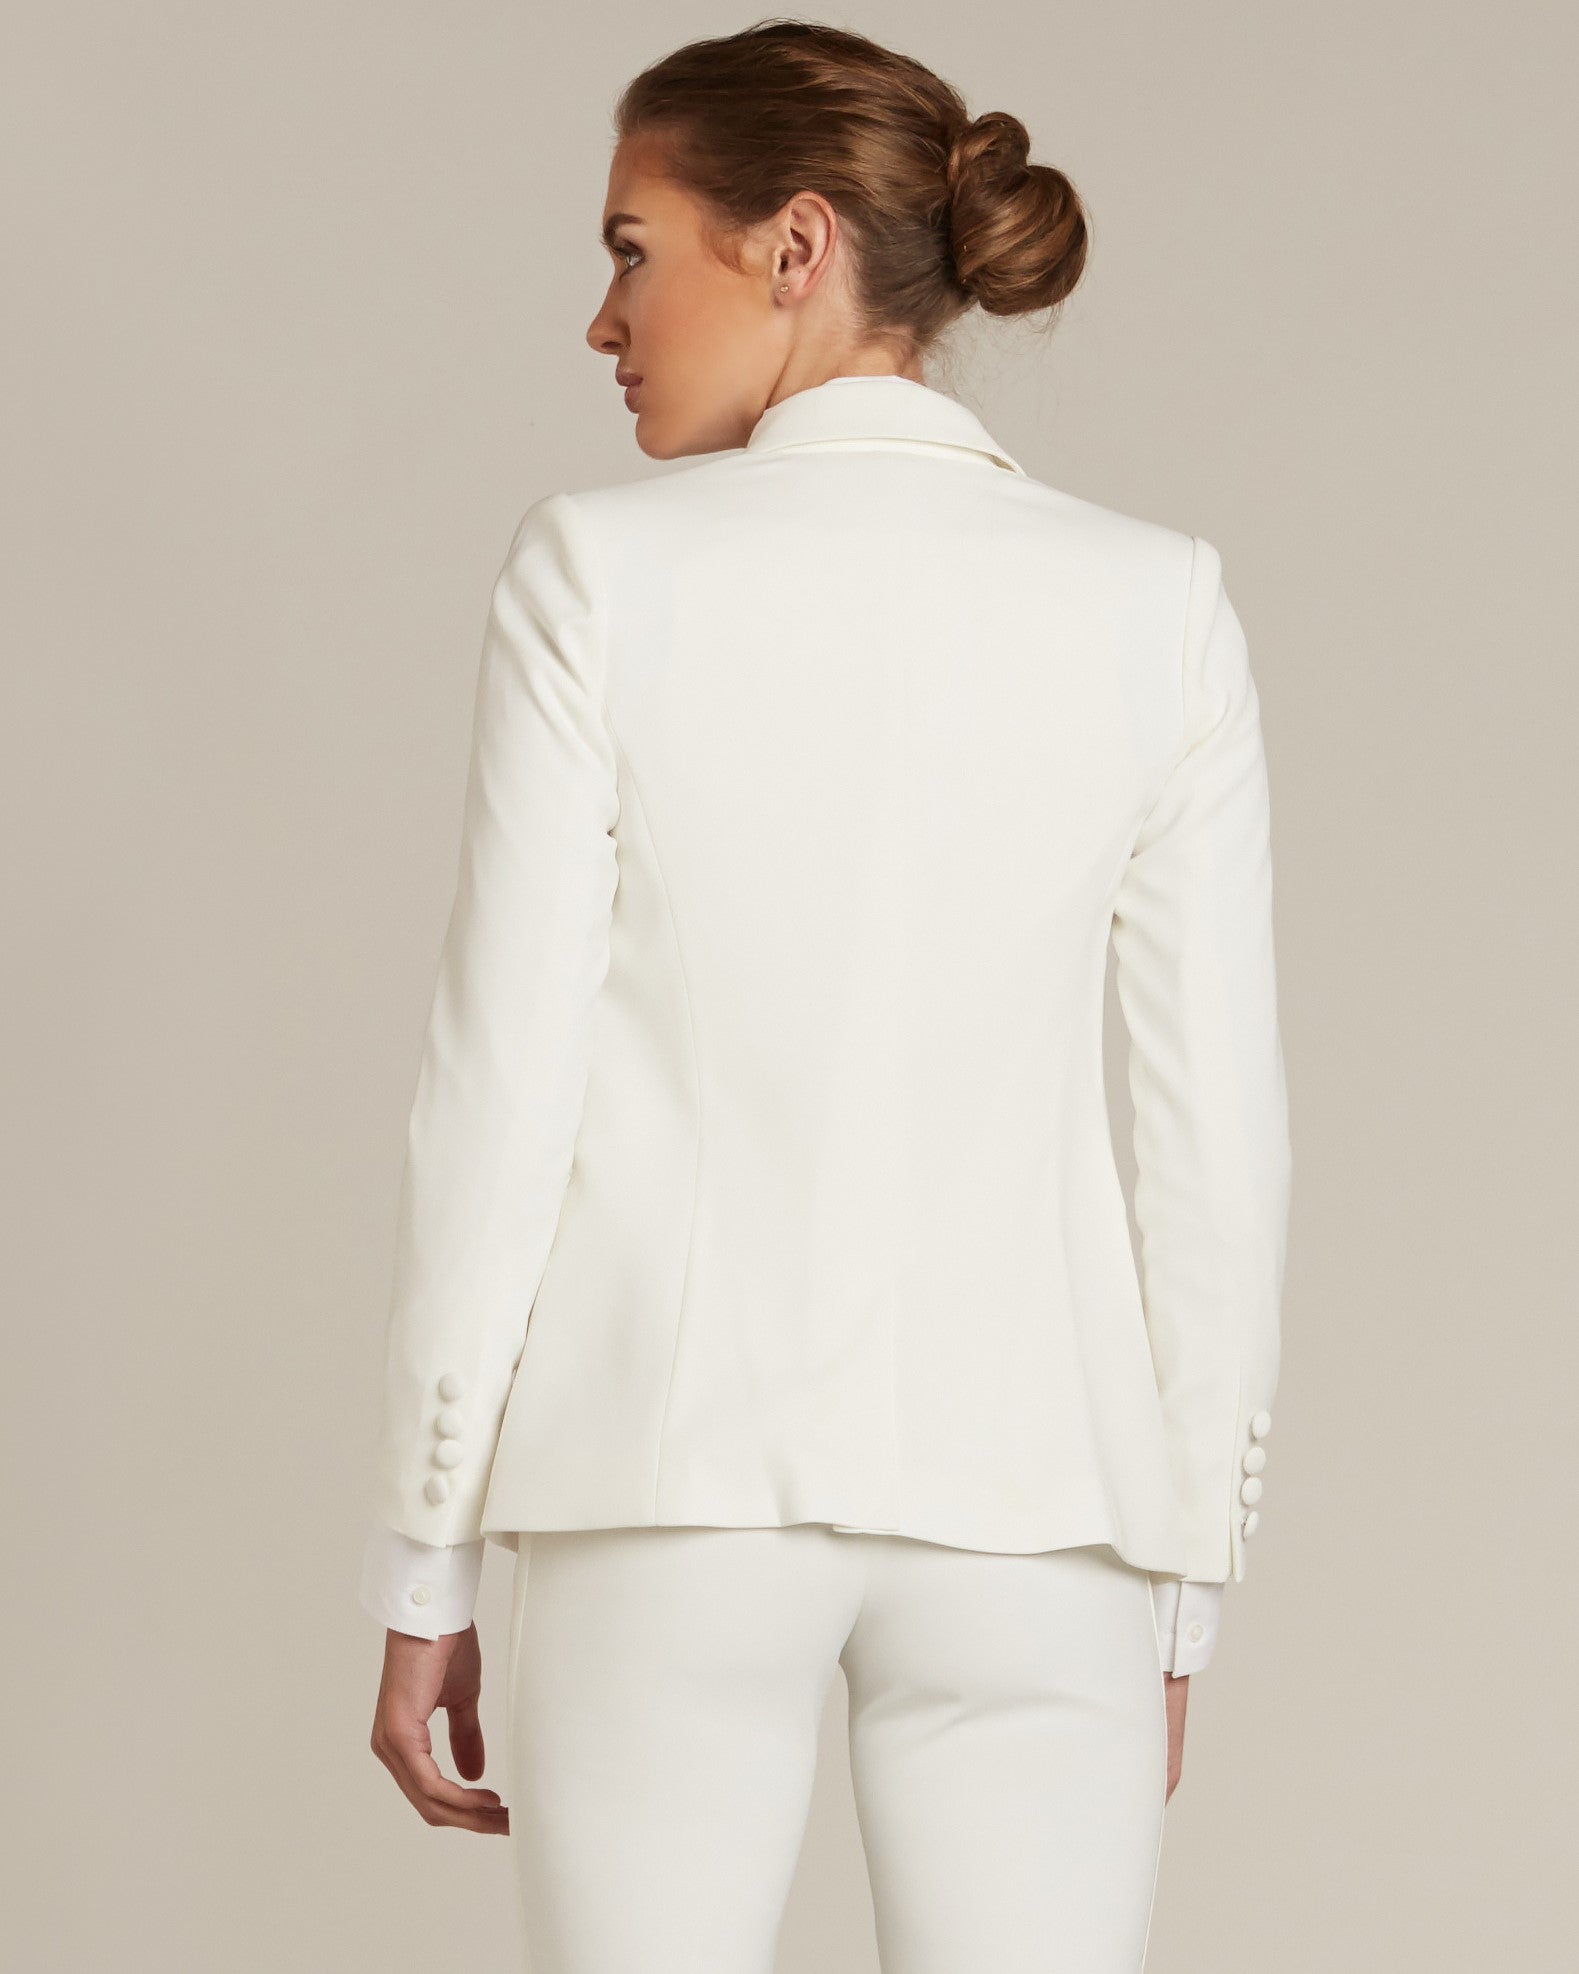 Diamond White Peak Lapel Tuxedo Jacket - Women’s Tuxedo Suits | girls prom tuxedo | gal tux | Wedding Party, Bridesmaids